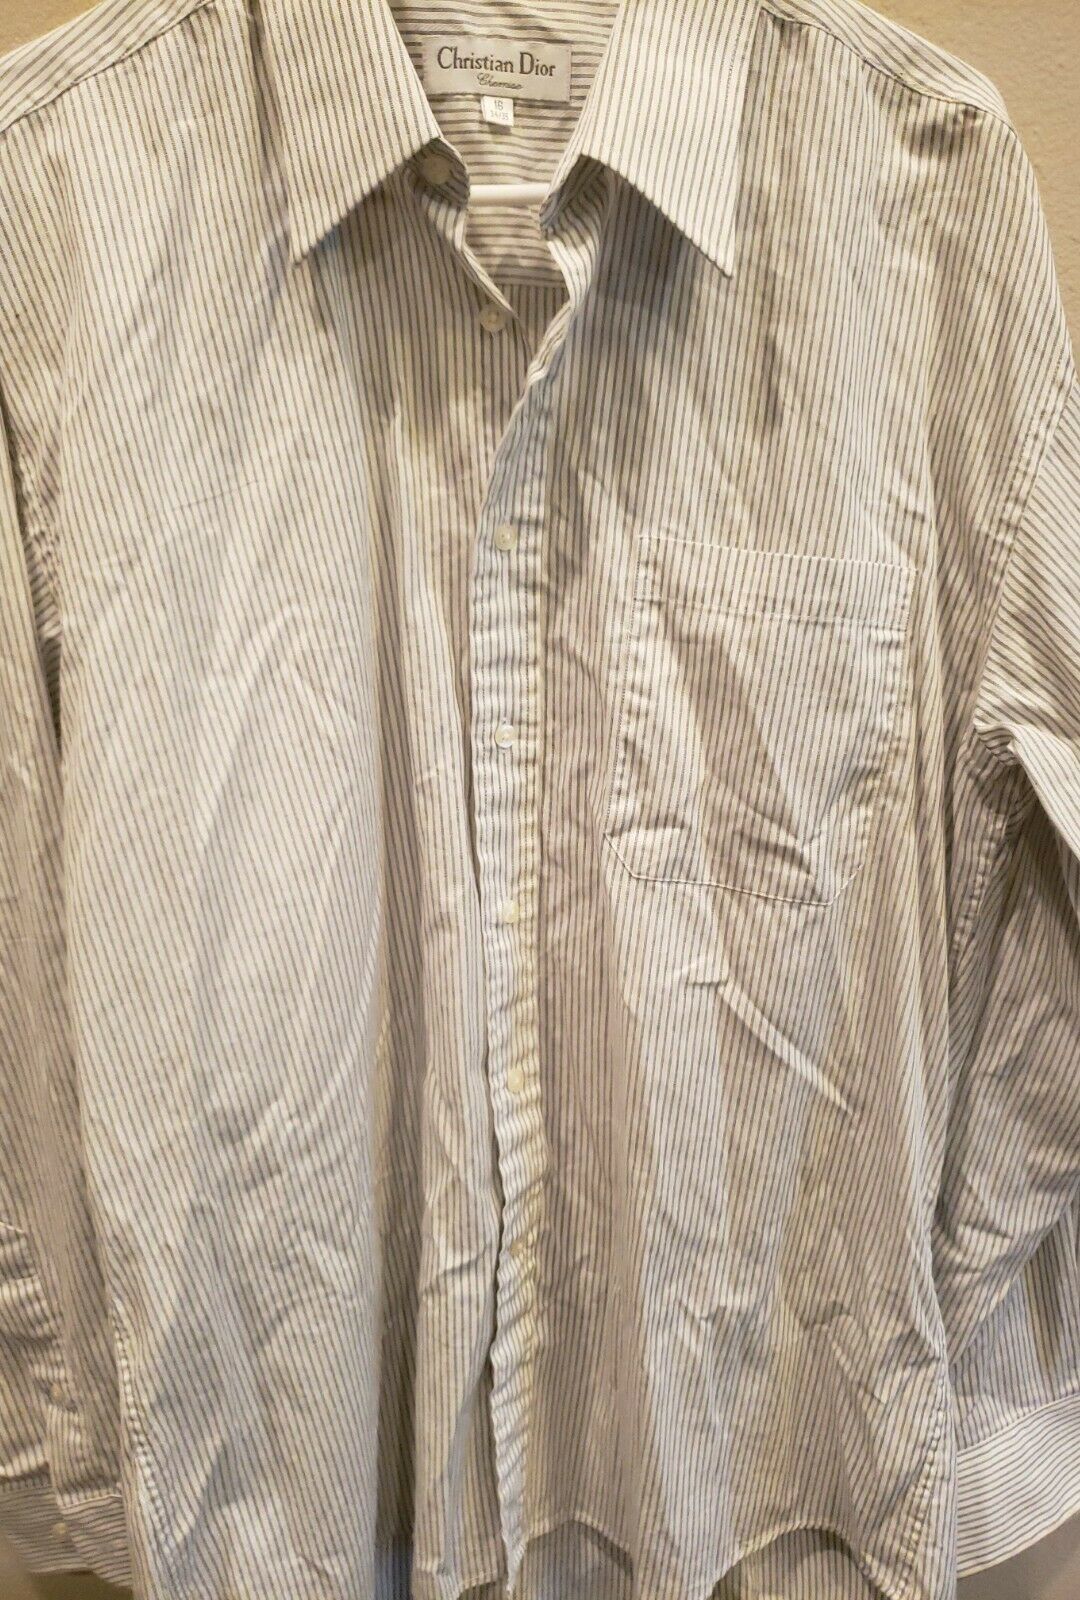 Men's Christian Dior Chemise Long Sleeve 100% Cotton Dress Shirt Sz 16 ...